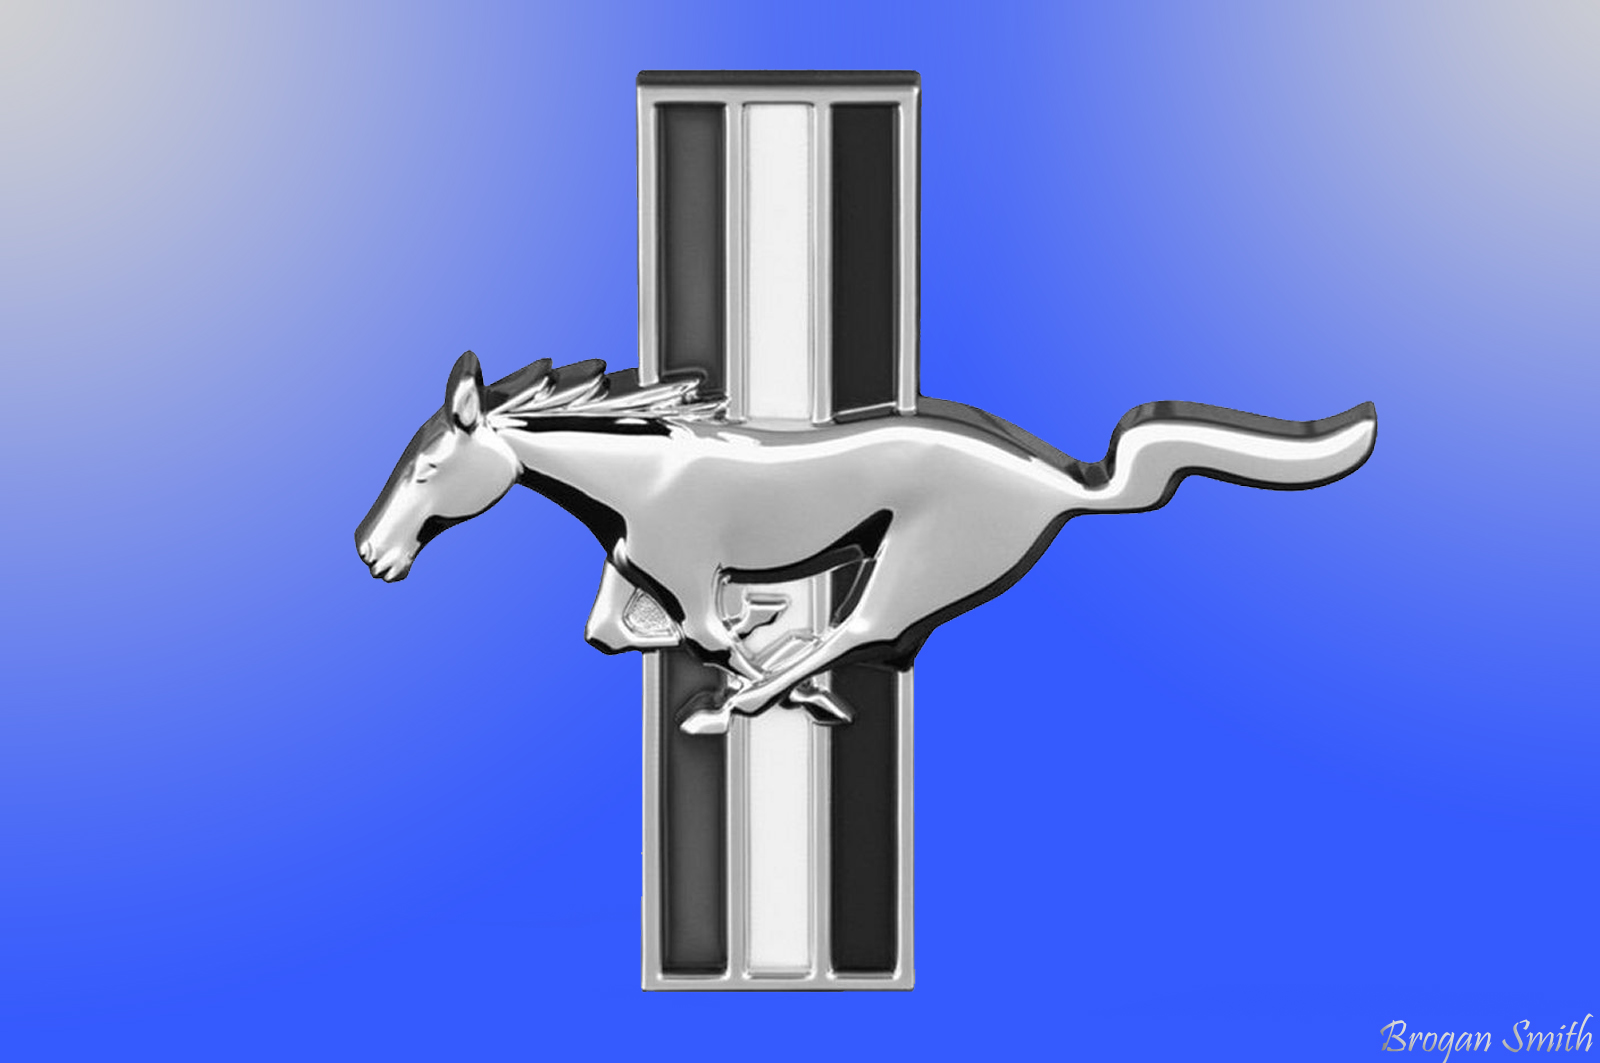 Ford Mustang Logo wallpaper   ForWallpapercom 1600x1063